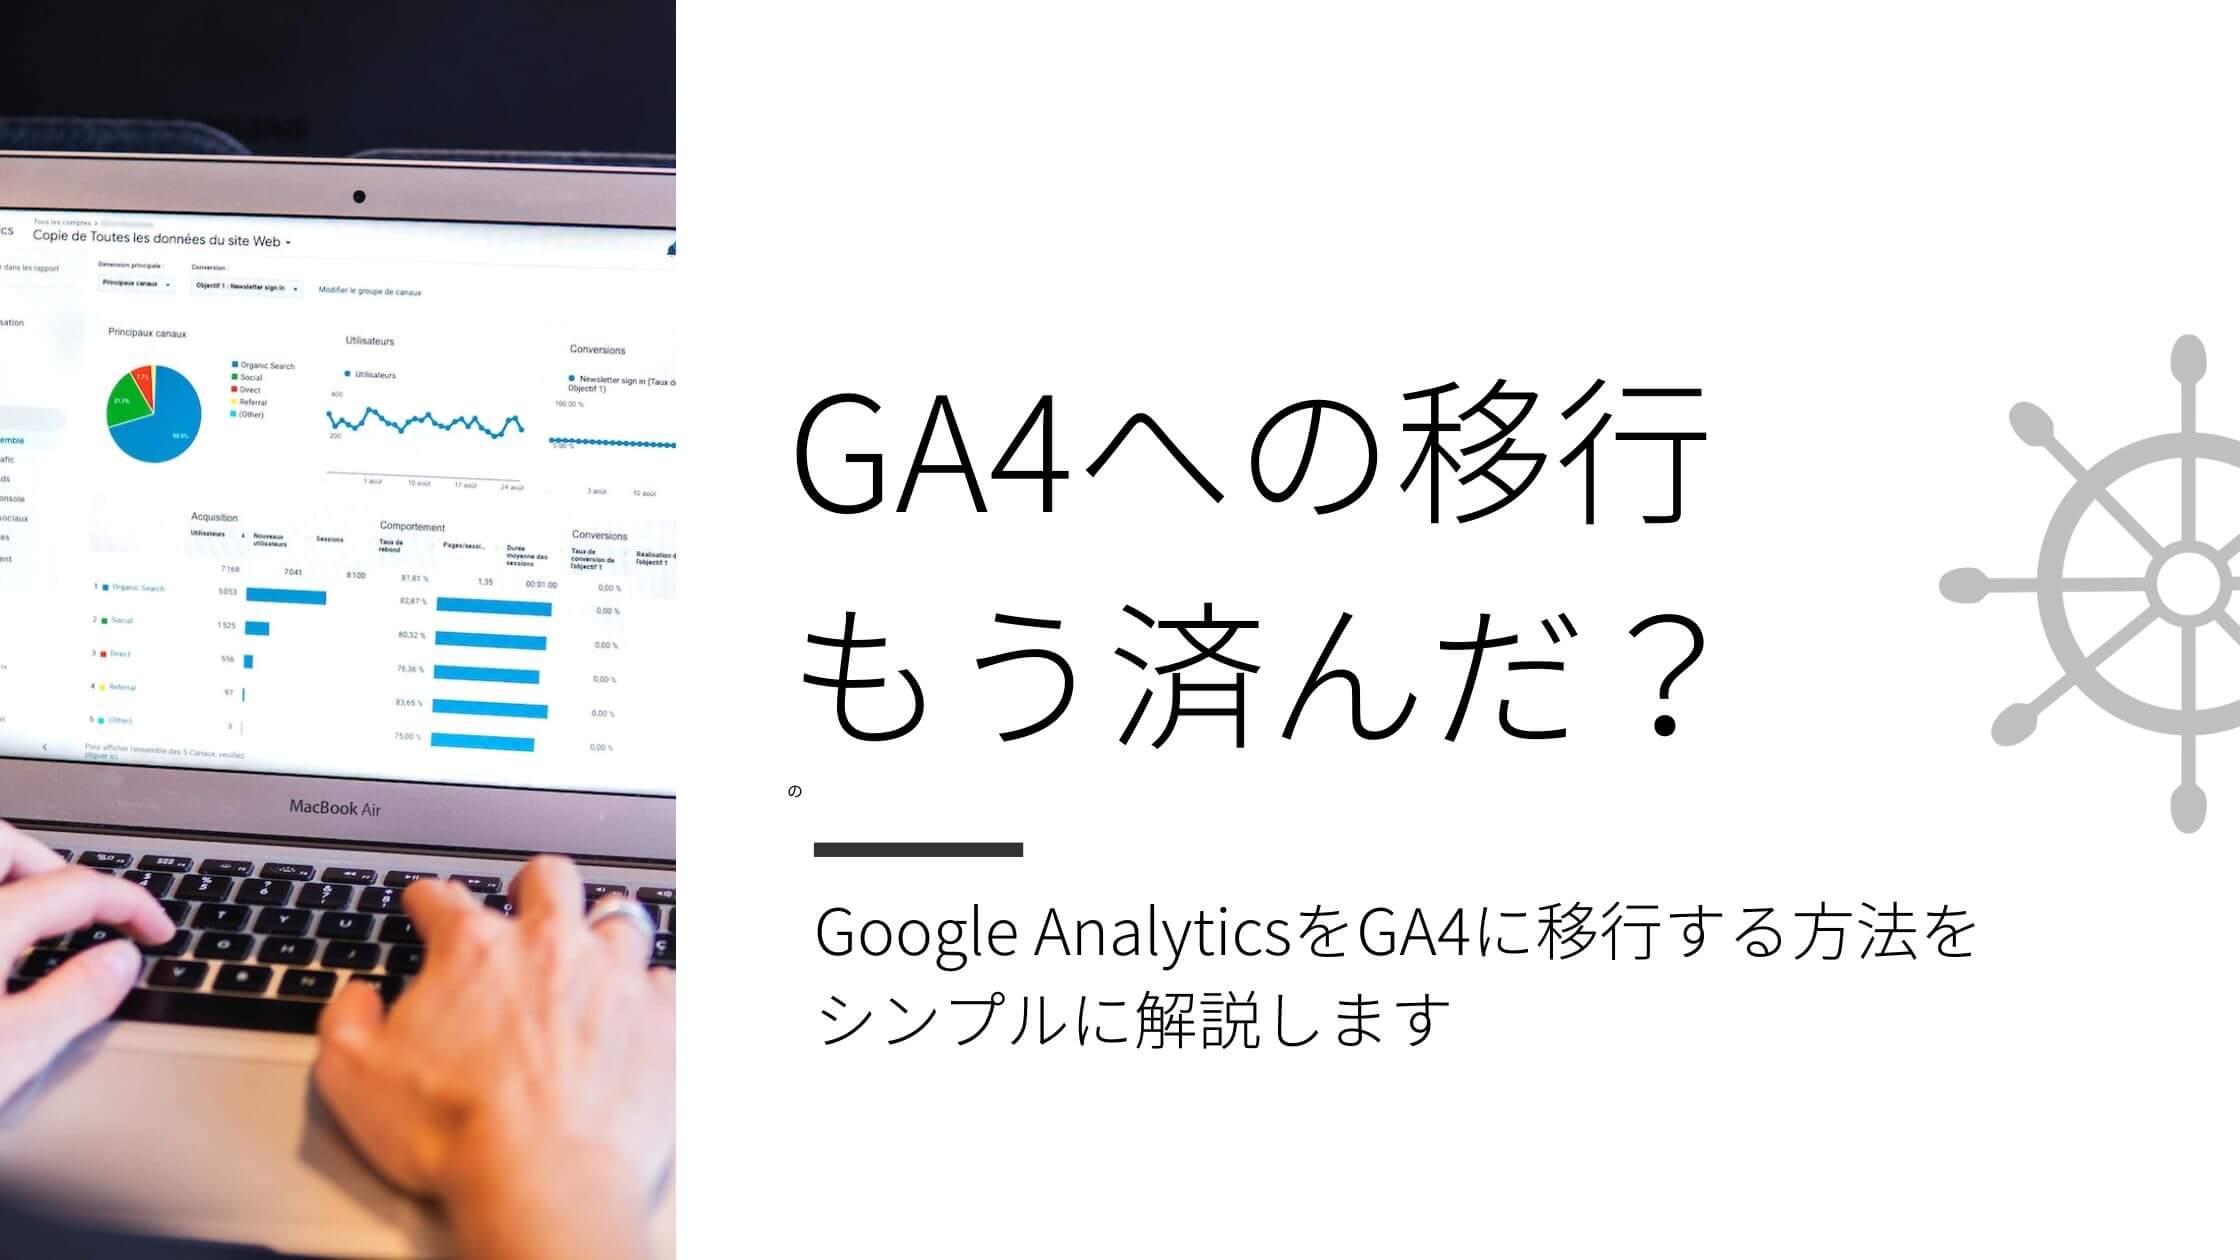 Google AnalyticsをGA4に移行する方法を シンプルに解説します